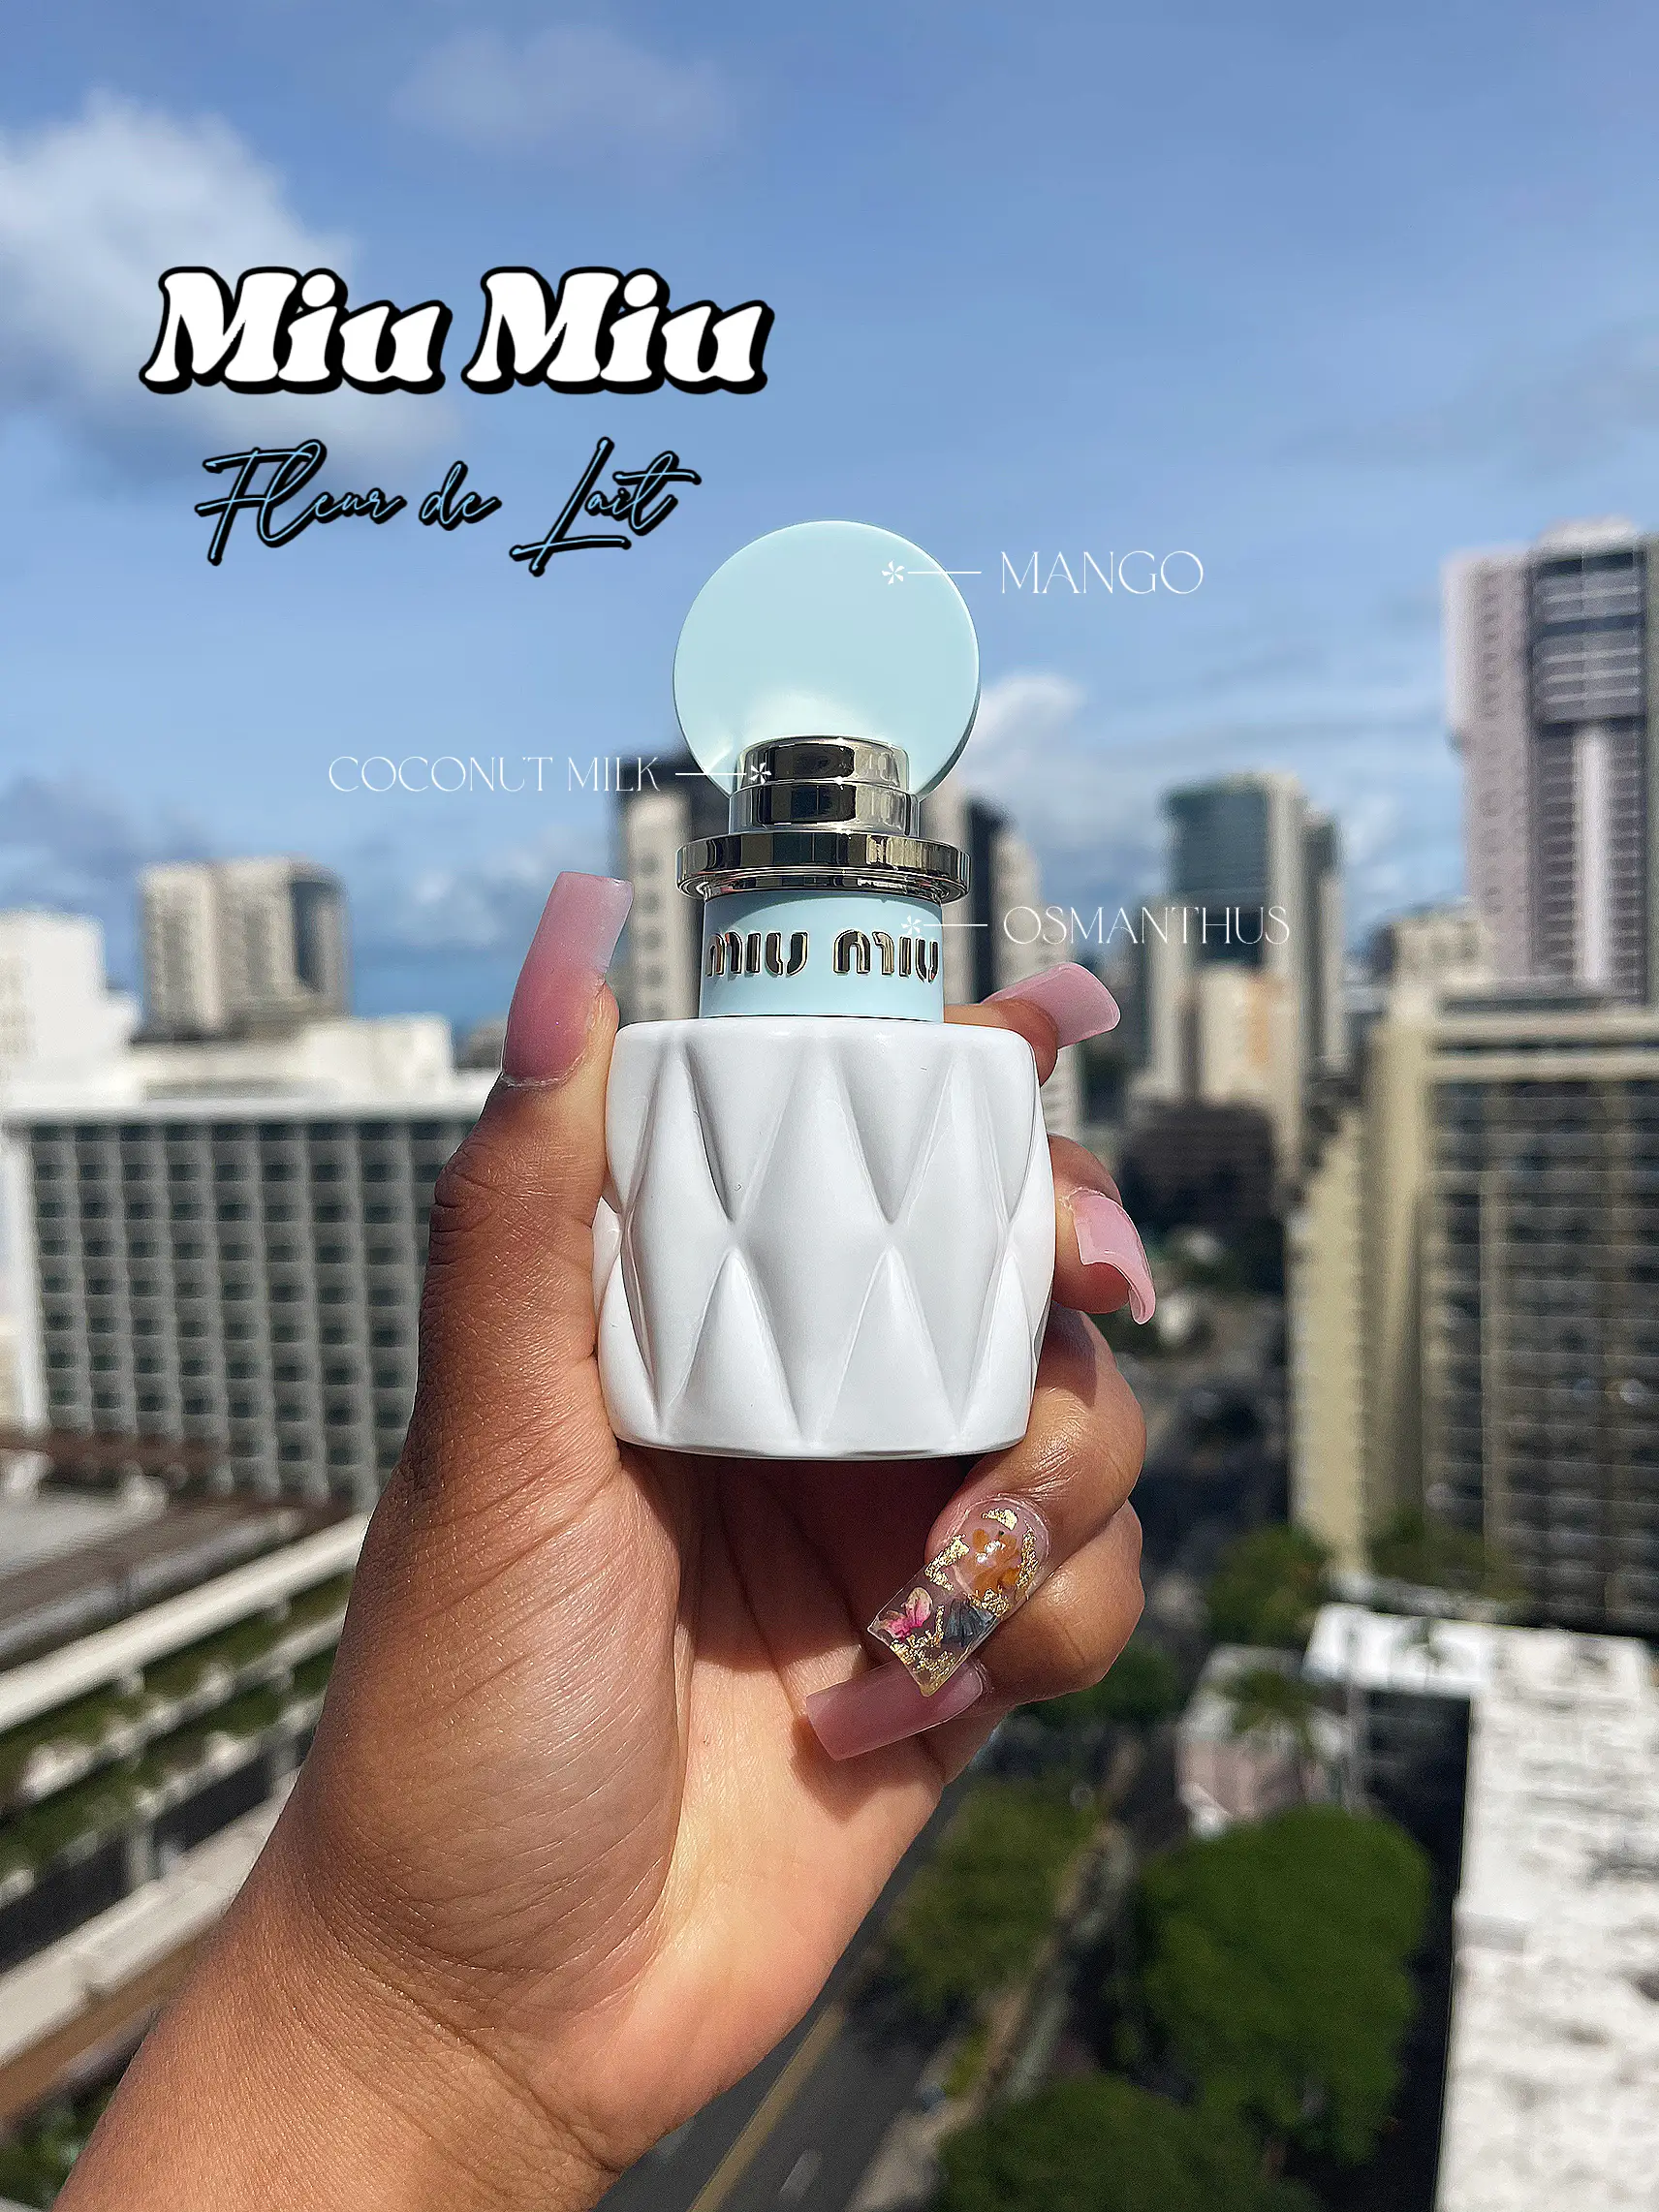 Miu Miu New Perfume Mango Shop | website.jkuat.ac.ke